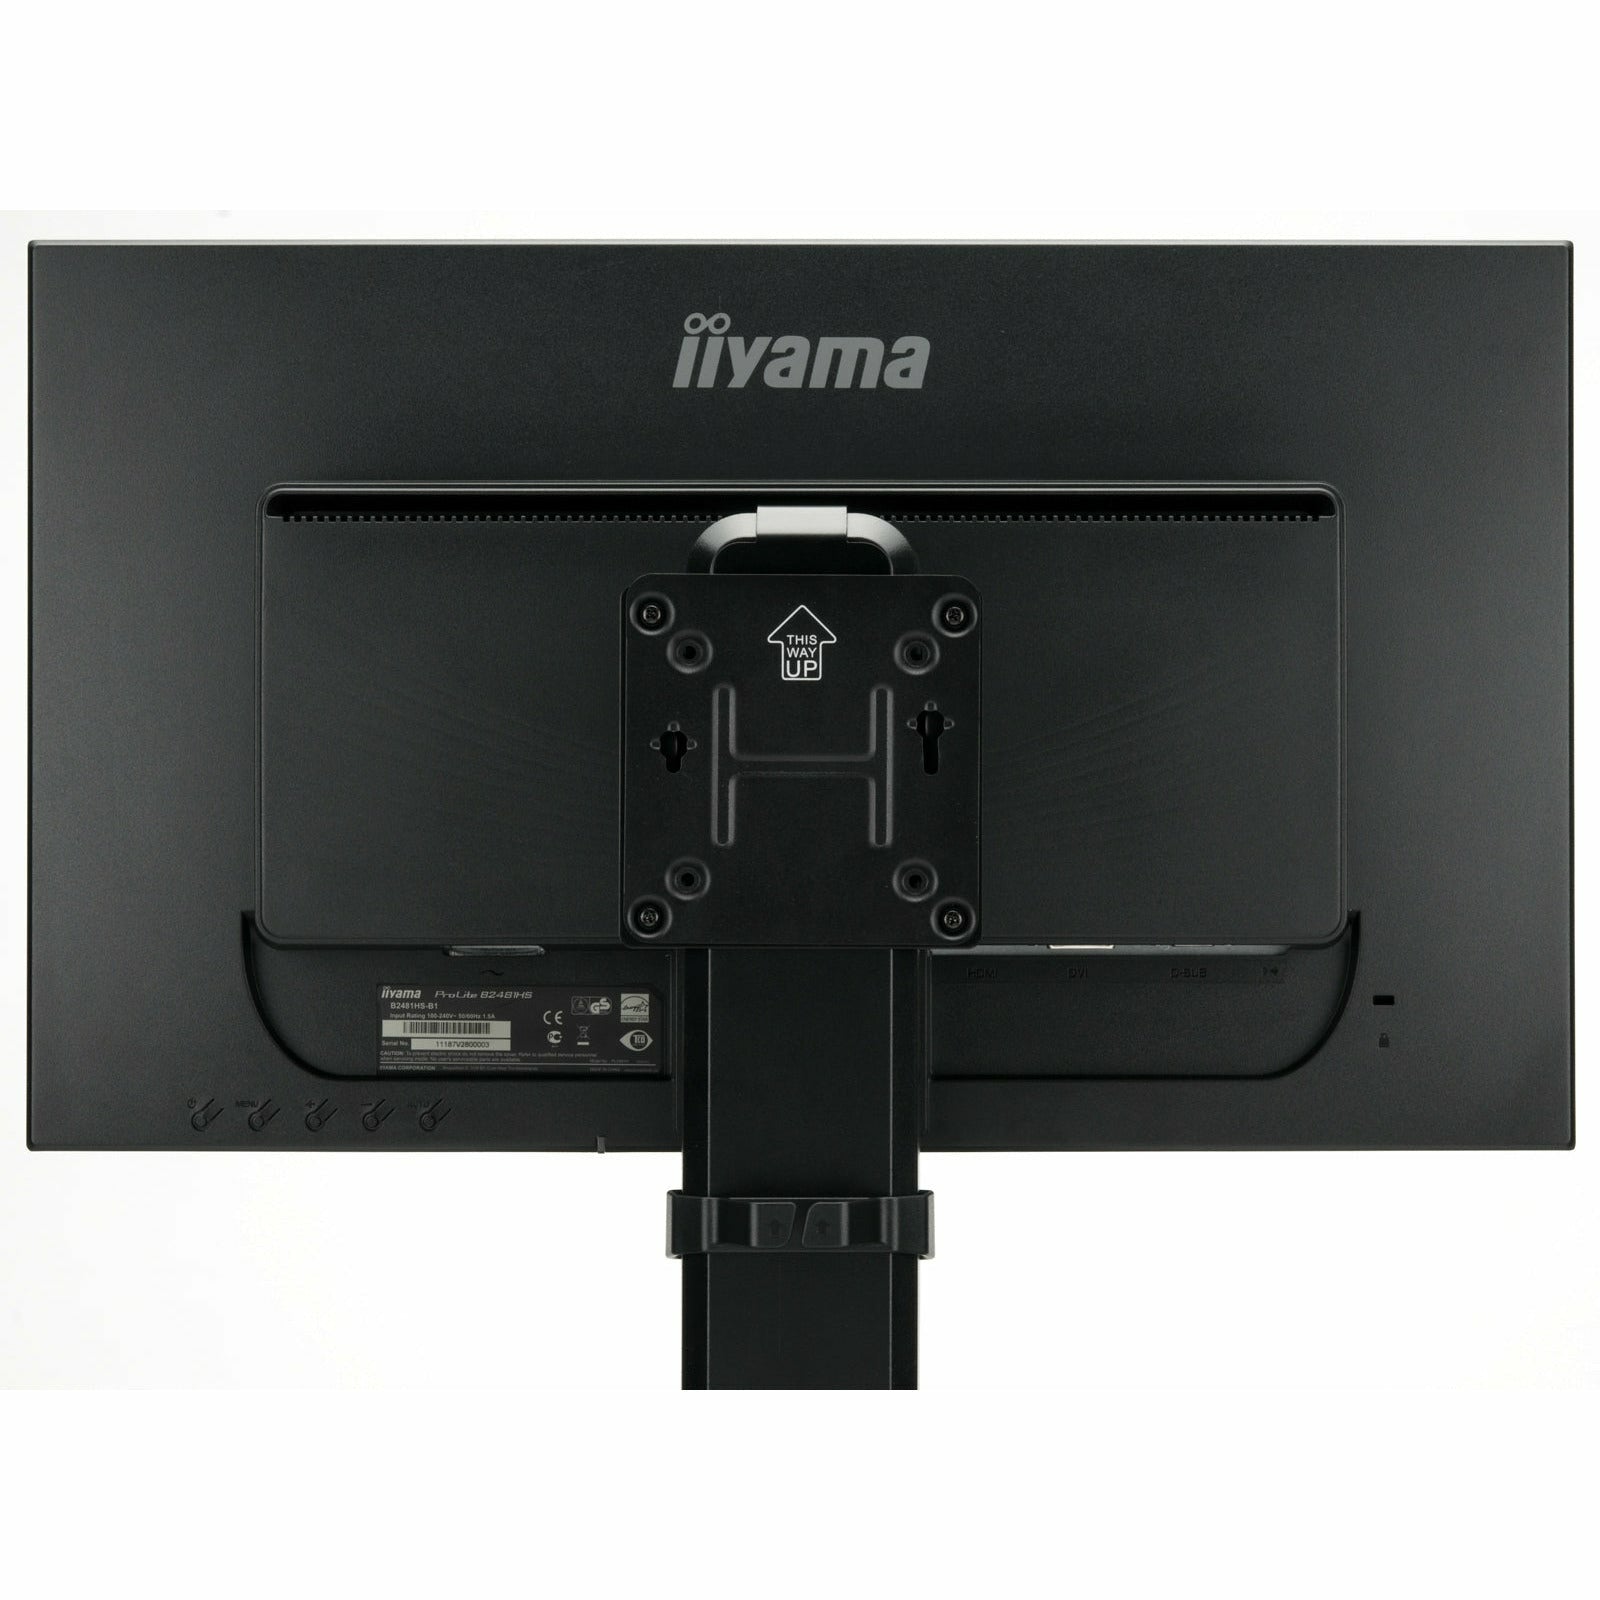 iiyama ProLite MD BRPCV02 Black PC Mount